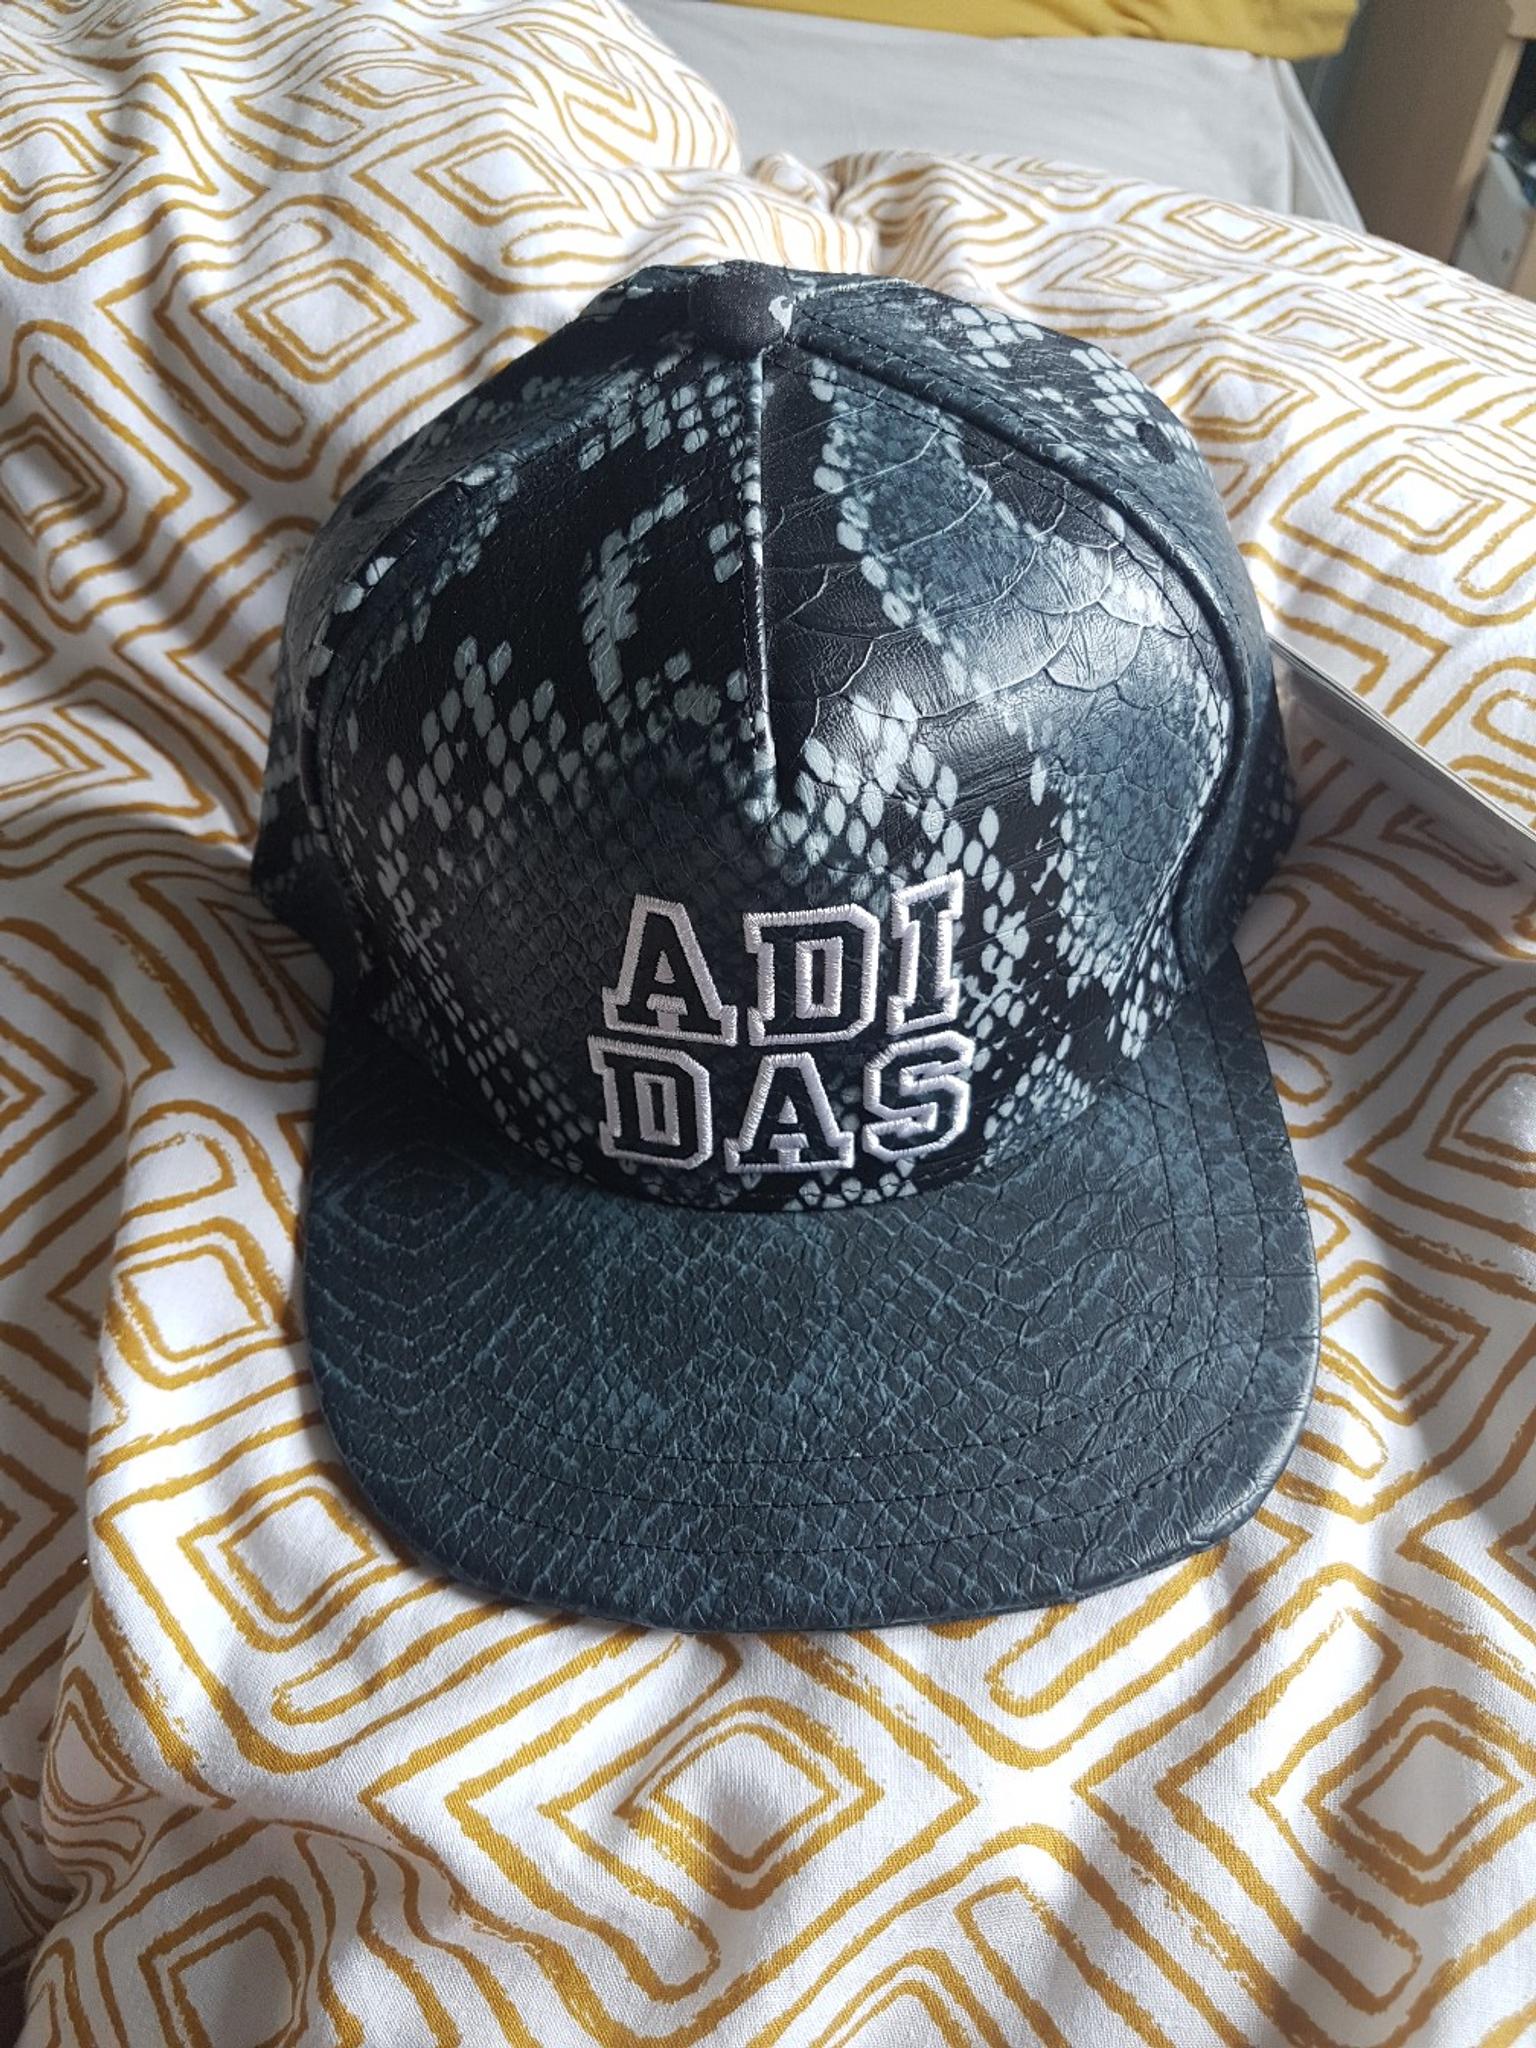 adidas limited edition hat